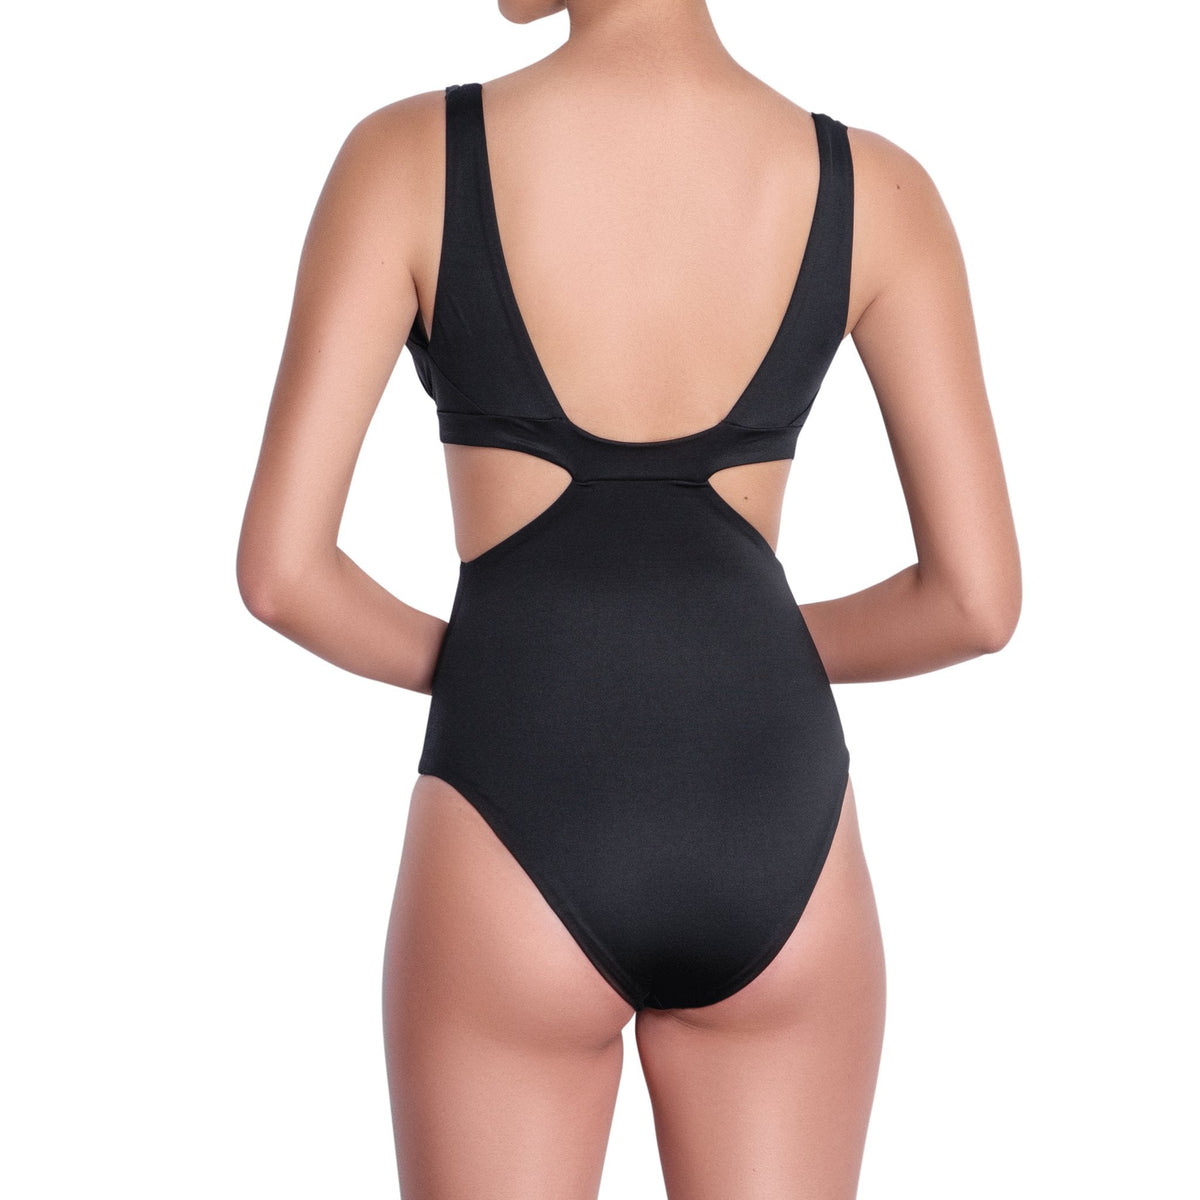 L√âA v-neck one piece, black swimsuit by ALMA swimwear ‚Äì back view 1